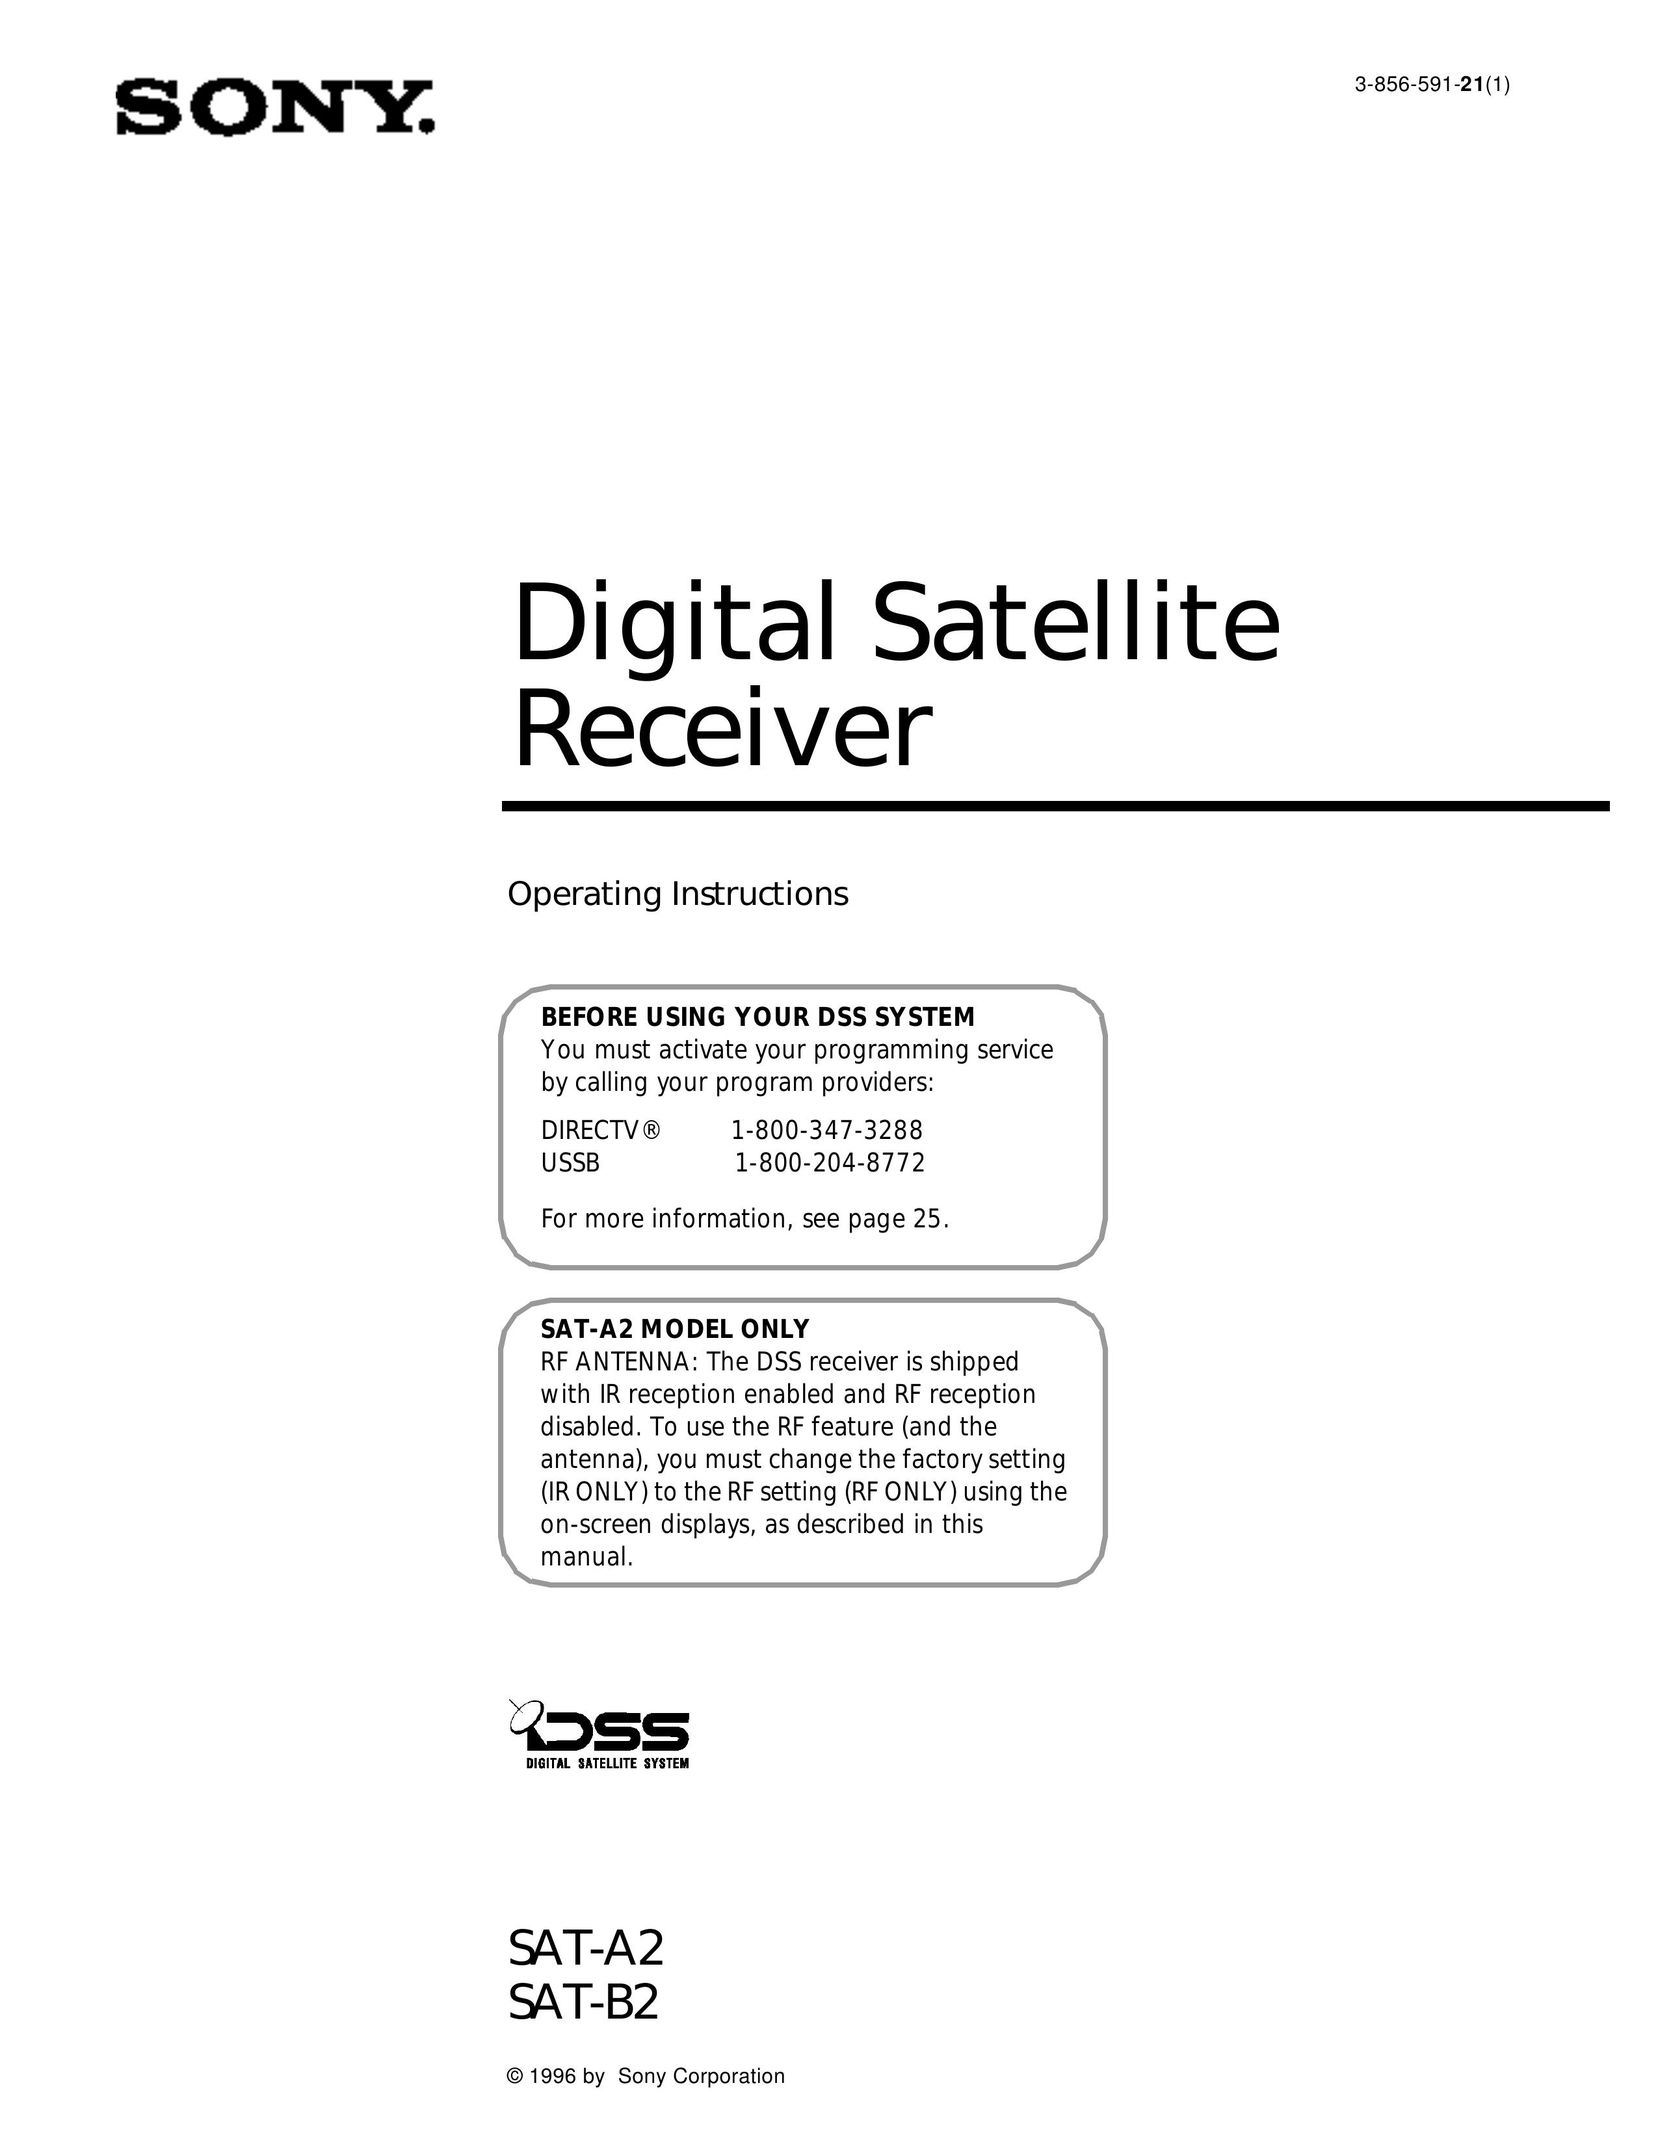 Sony SAT-A2 Satellite TV System User Manual